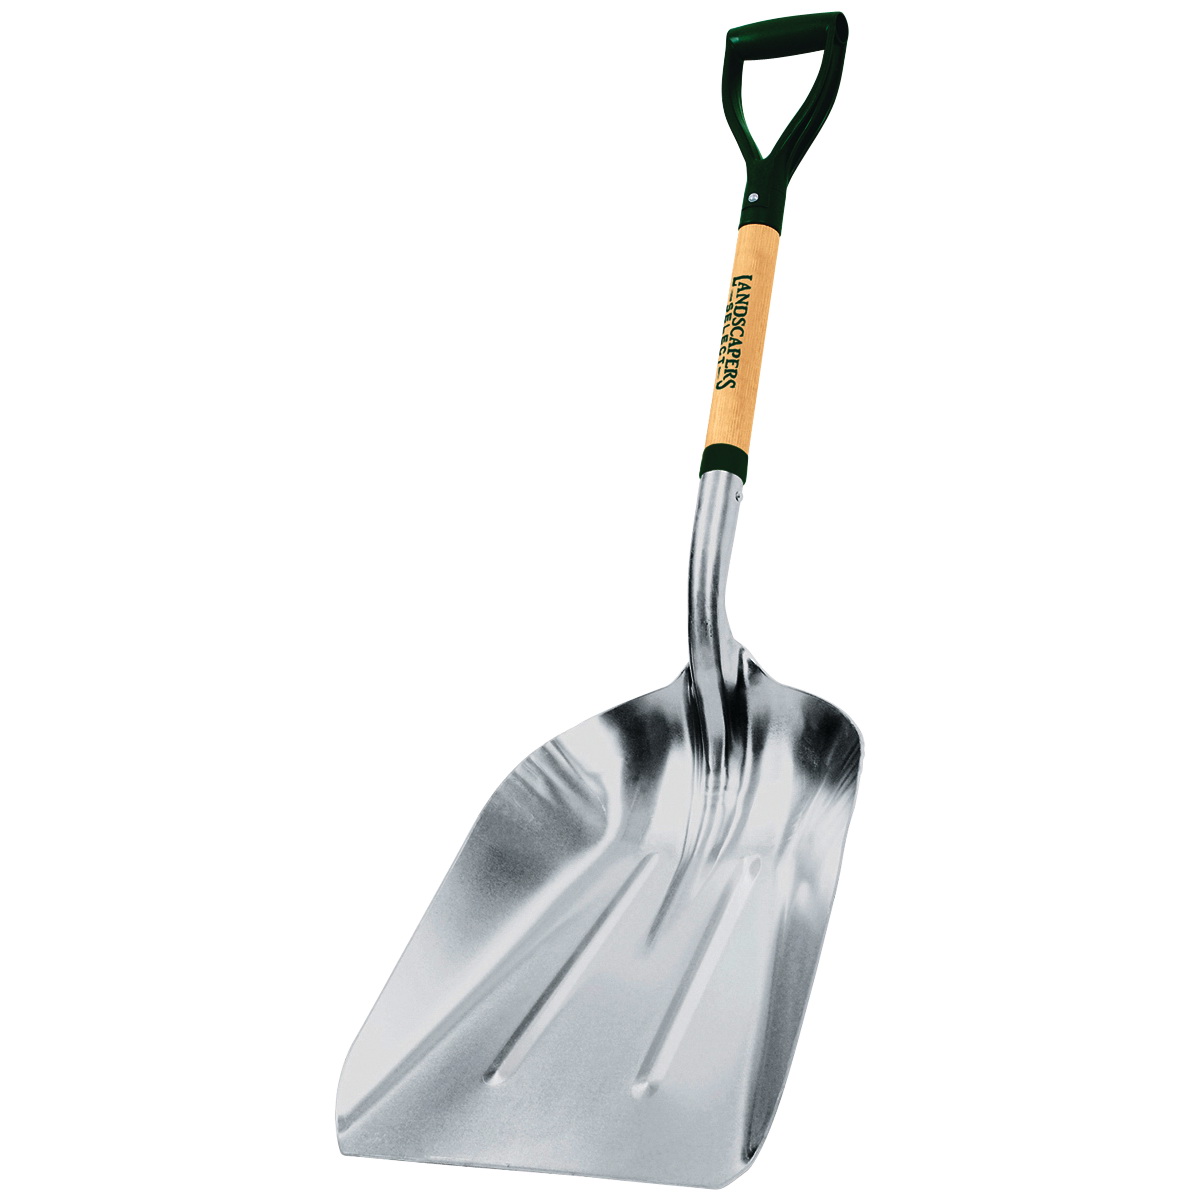 Landscapers Select 34605 Scoop Shovel, Aluminum Blade, Wood Handle, D-Shaped Handle